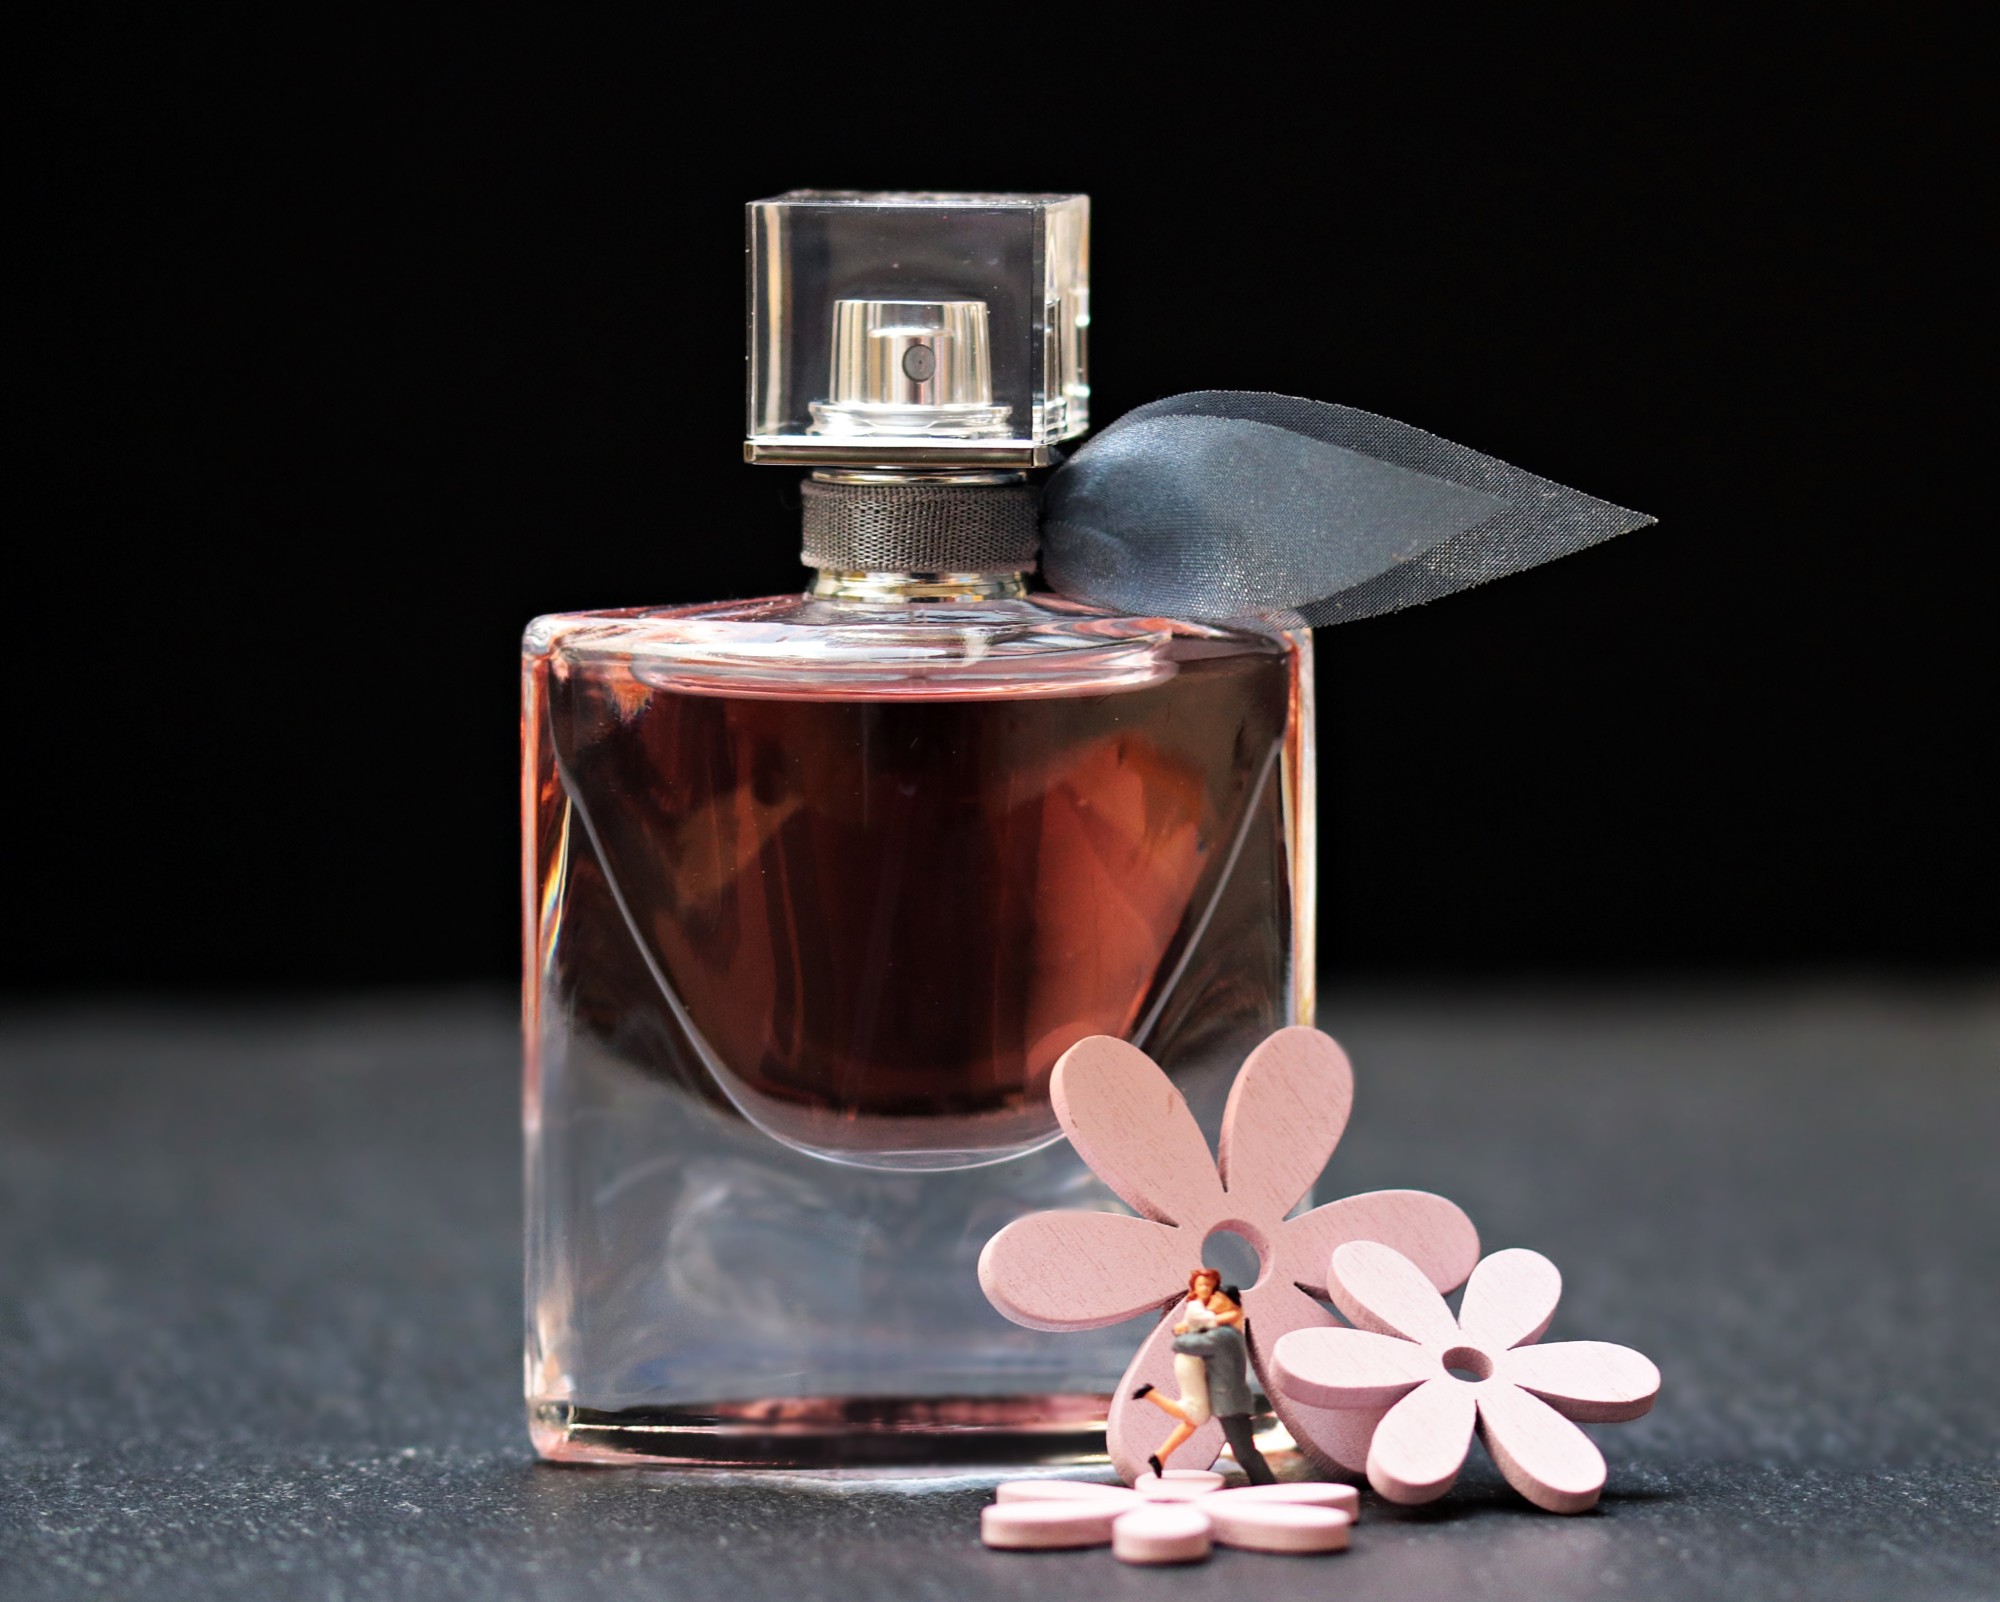 9 Essential Benefits of Wearing Perfume